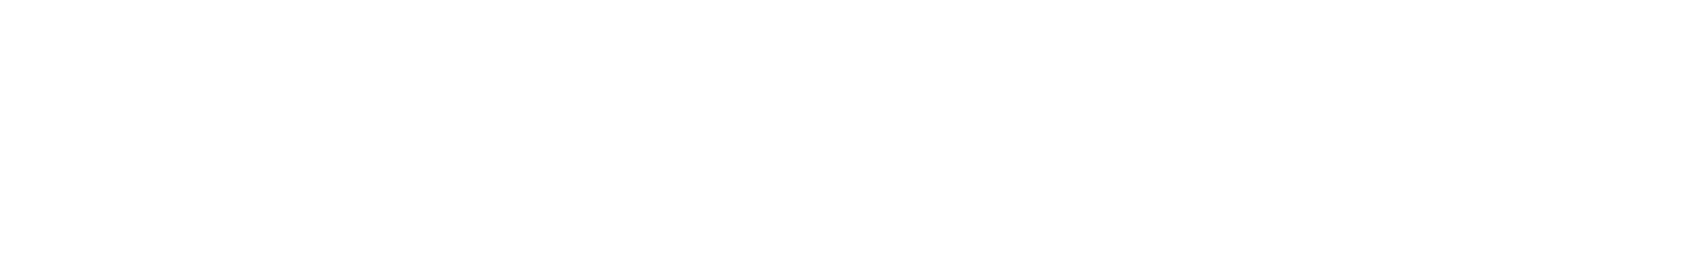 First Advantage Logo groß für dunkle Hintergründe (transparentes PNG)